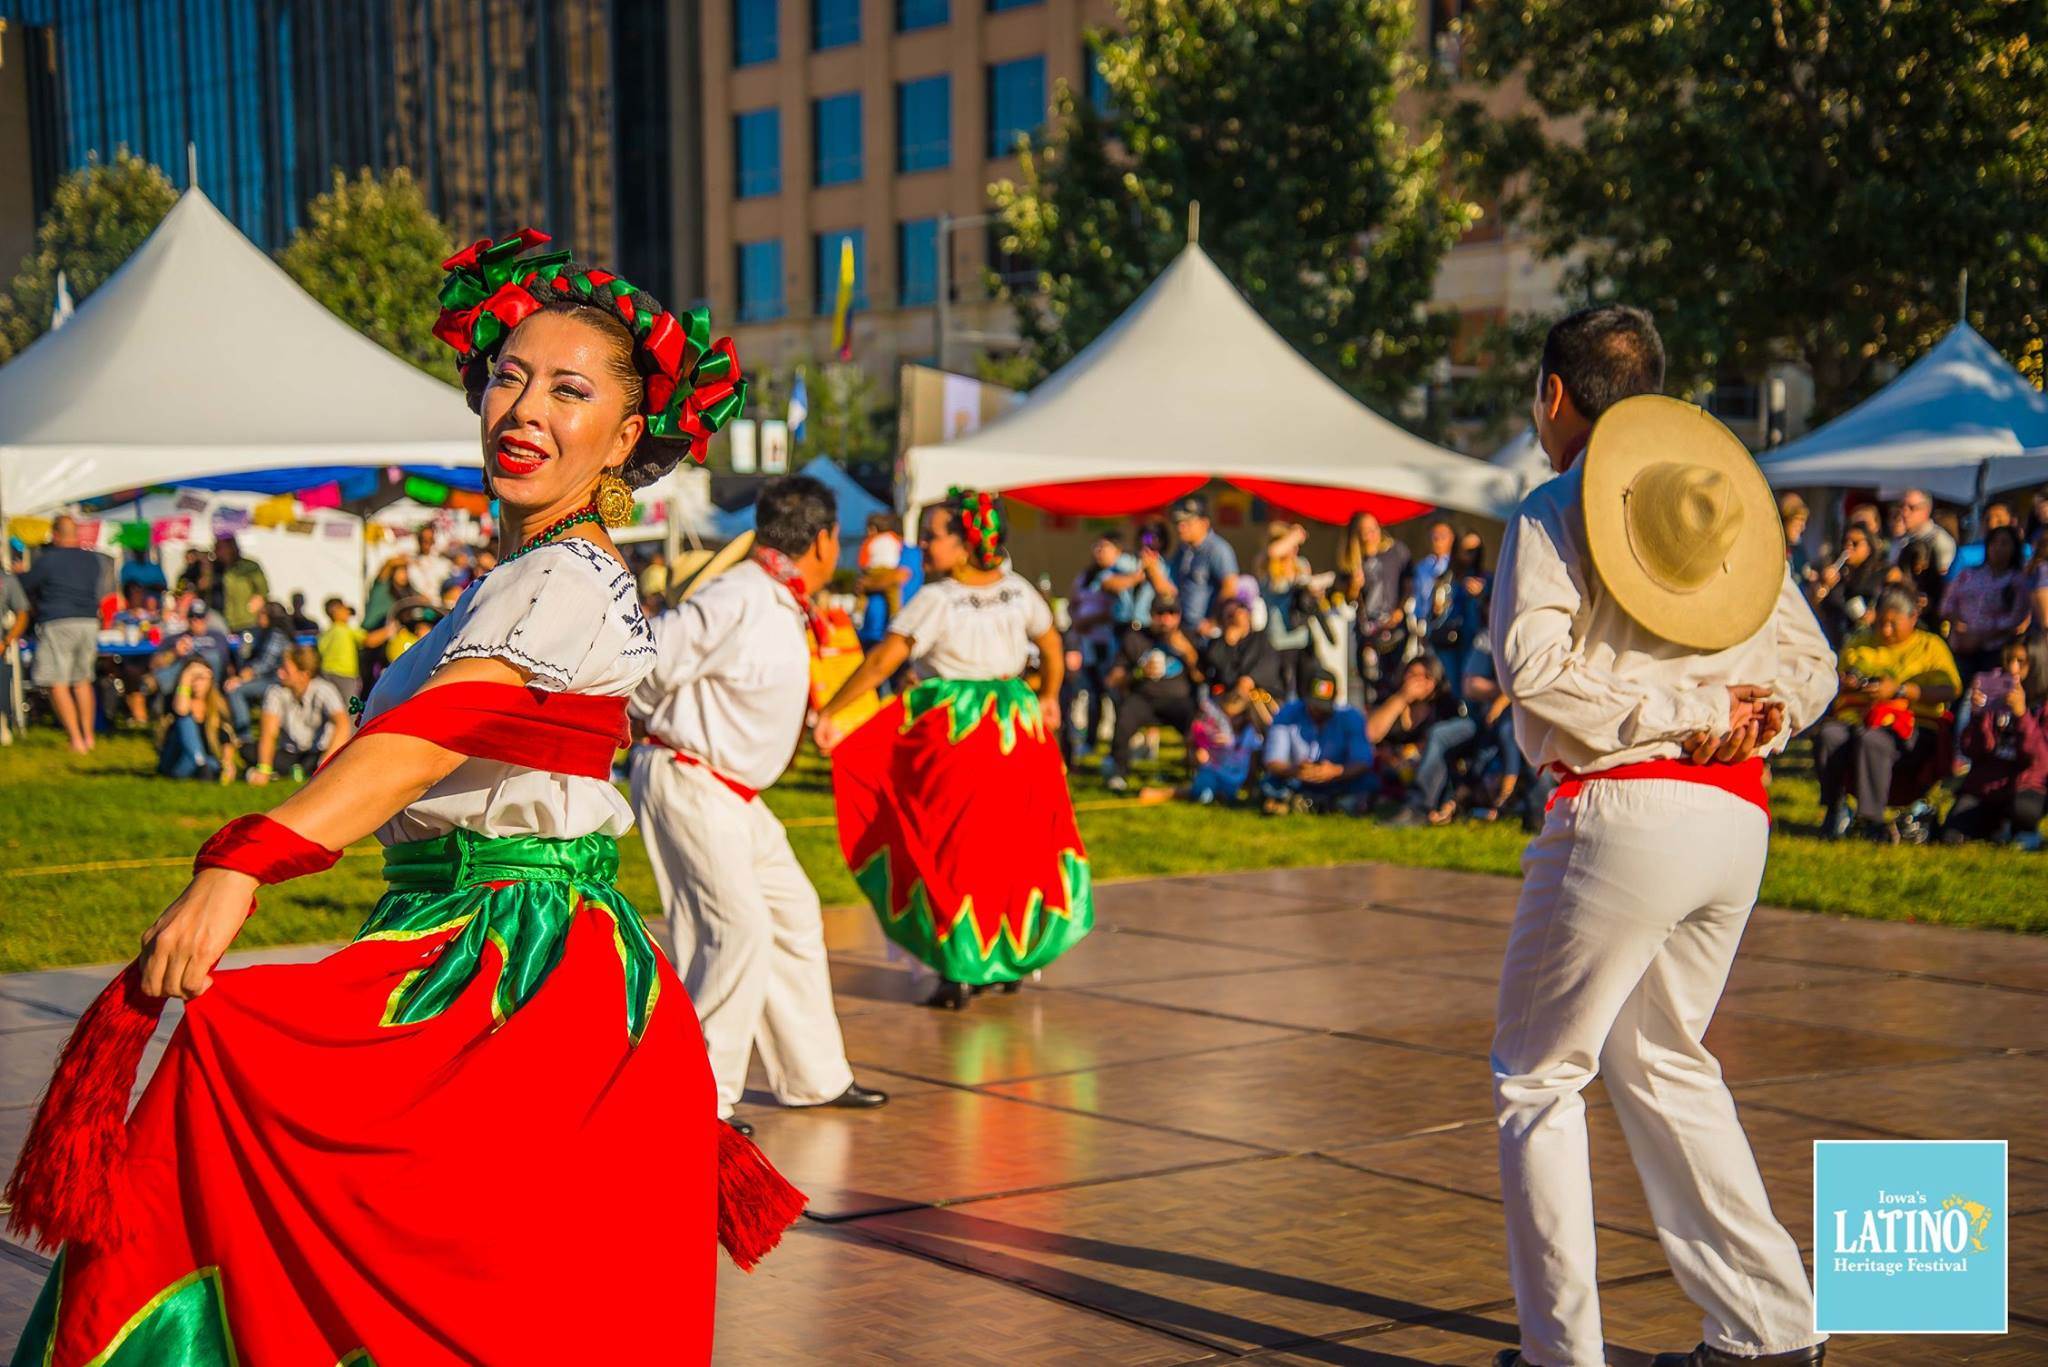 Latino Heritage Festival dancers